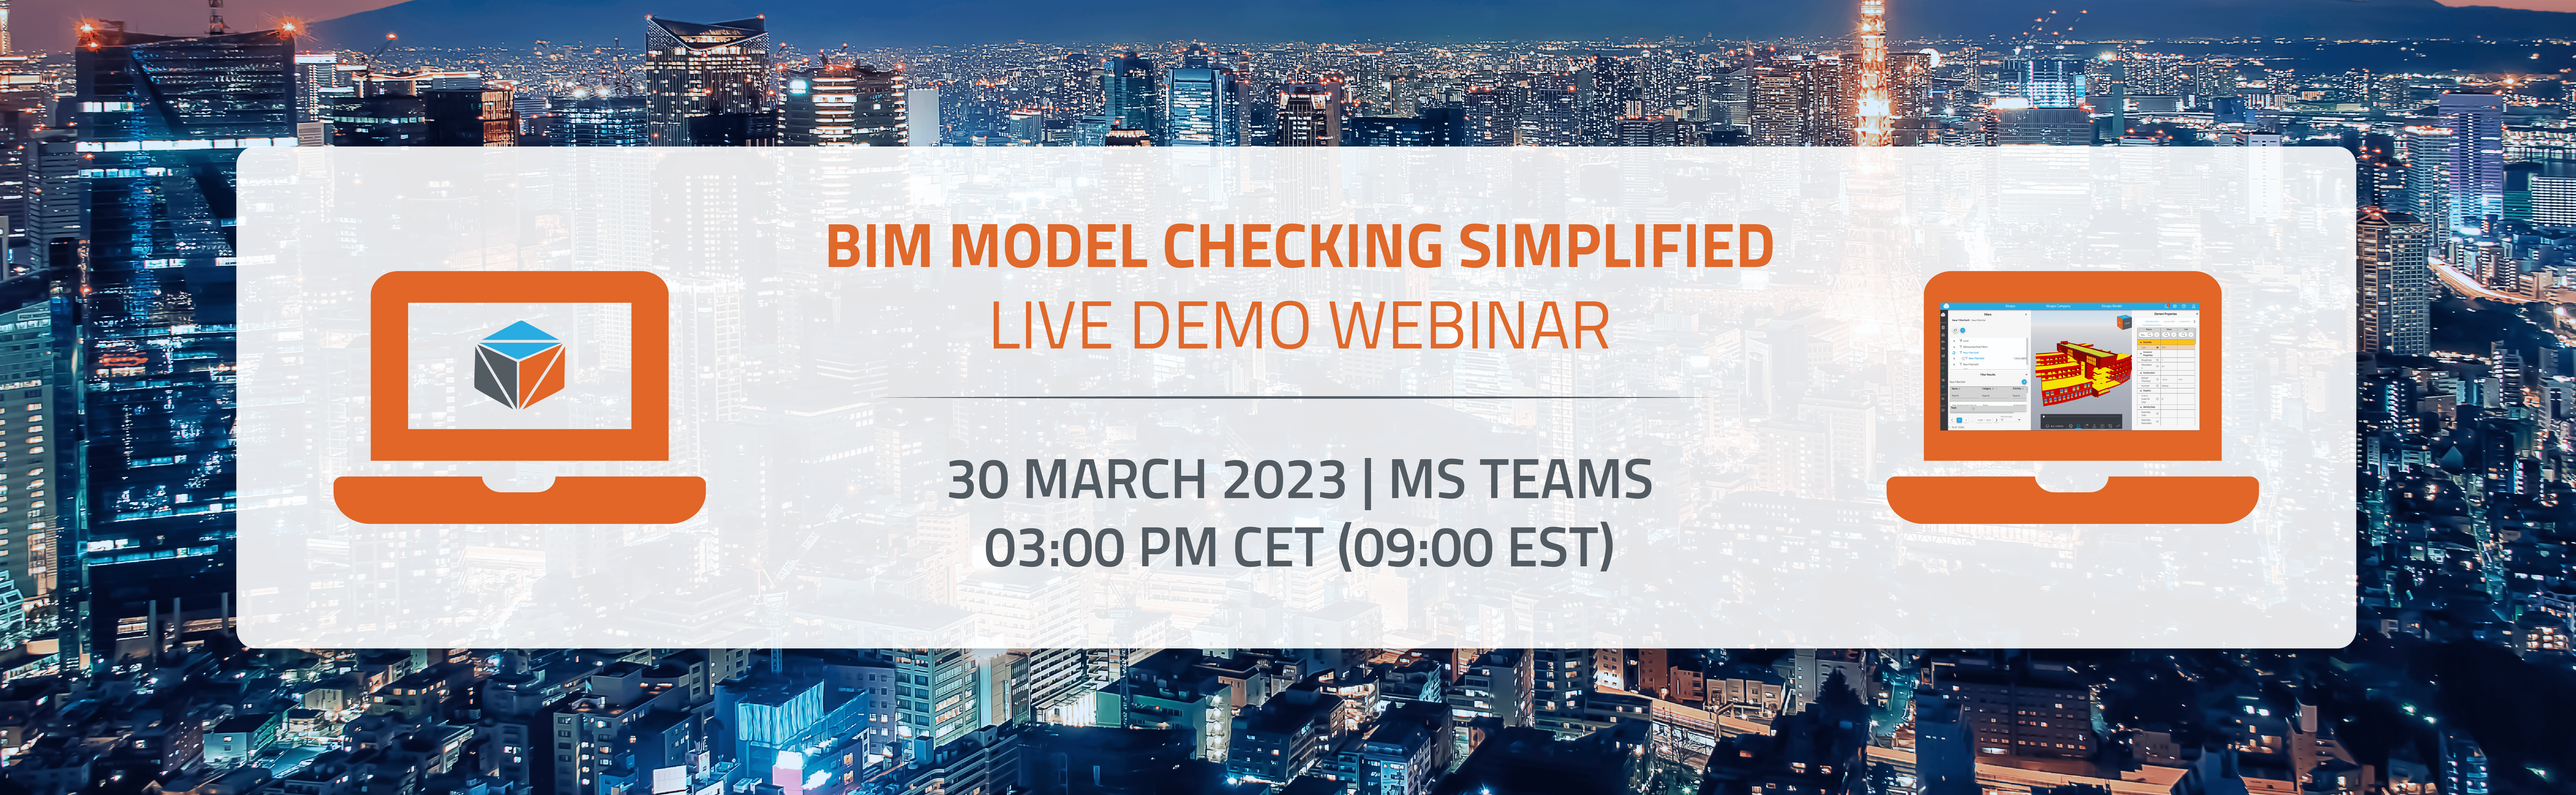 Live Demo Webinar - BIM Model Checking Simplified - March 2023